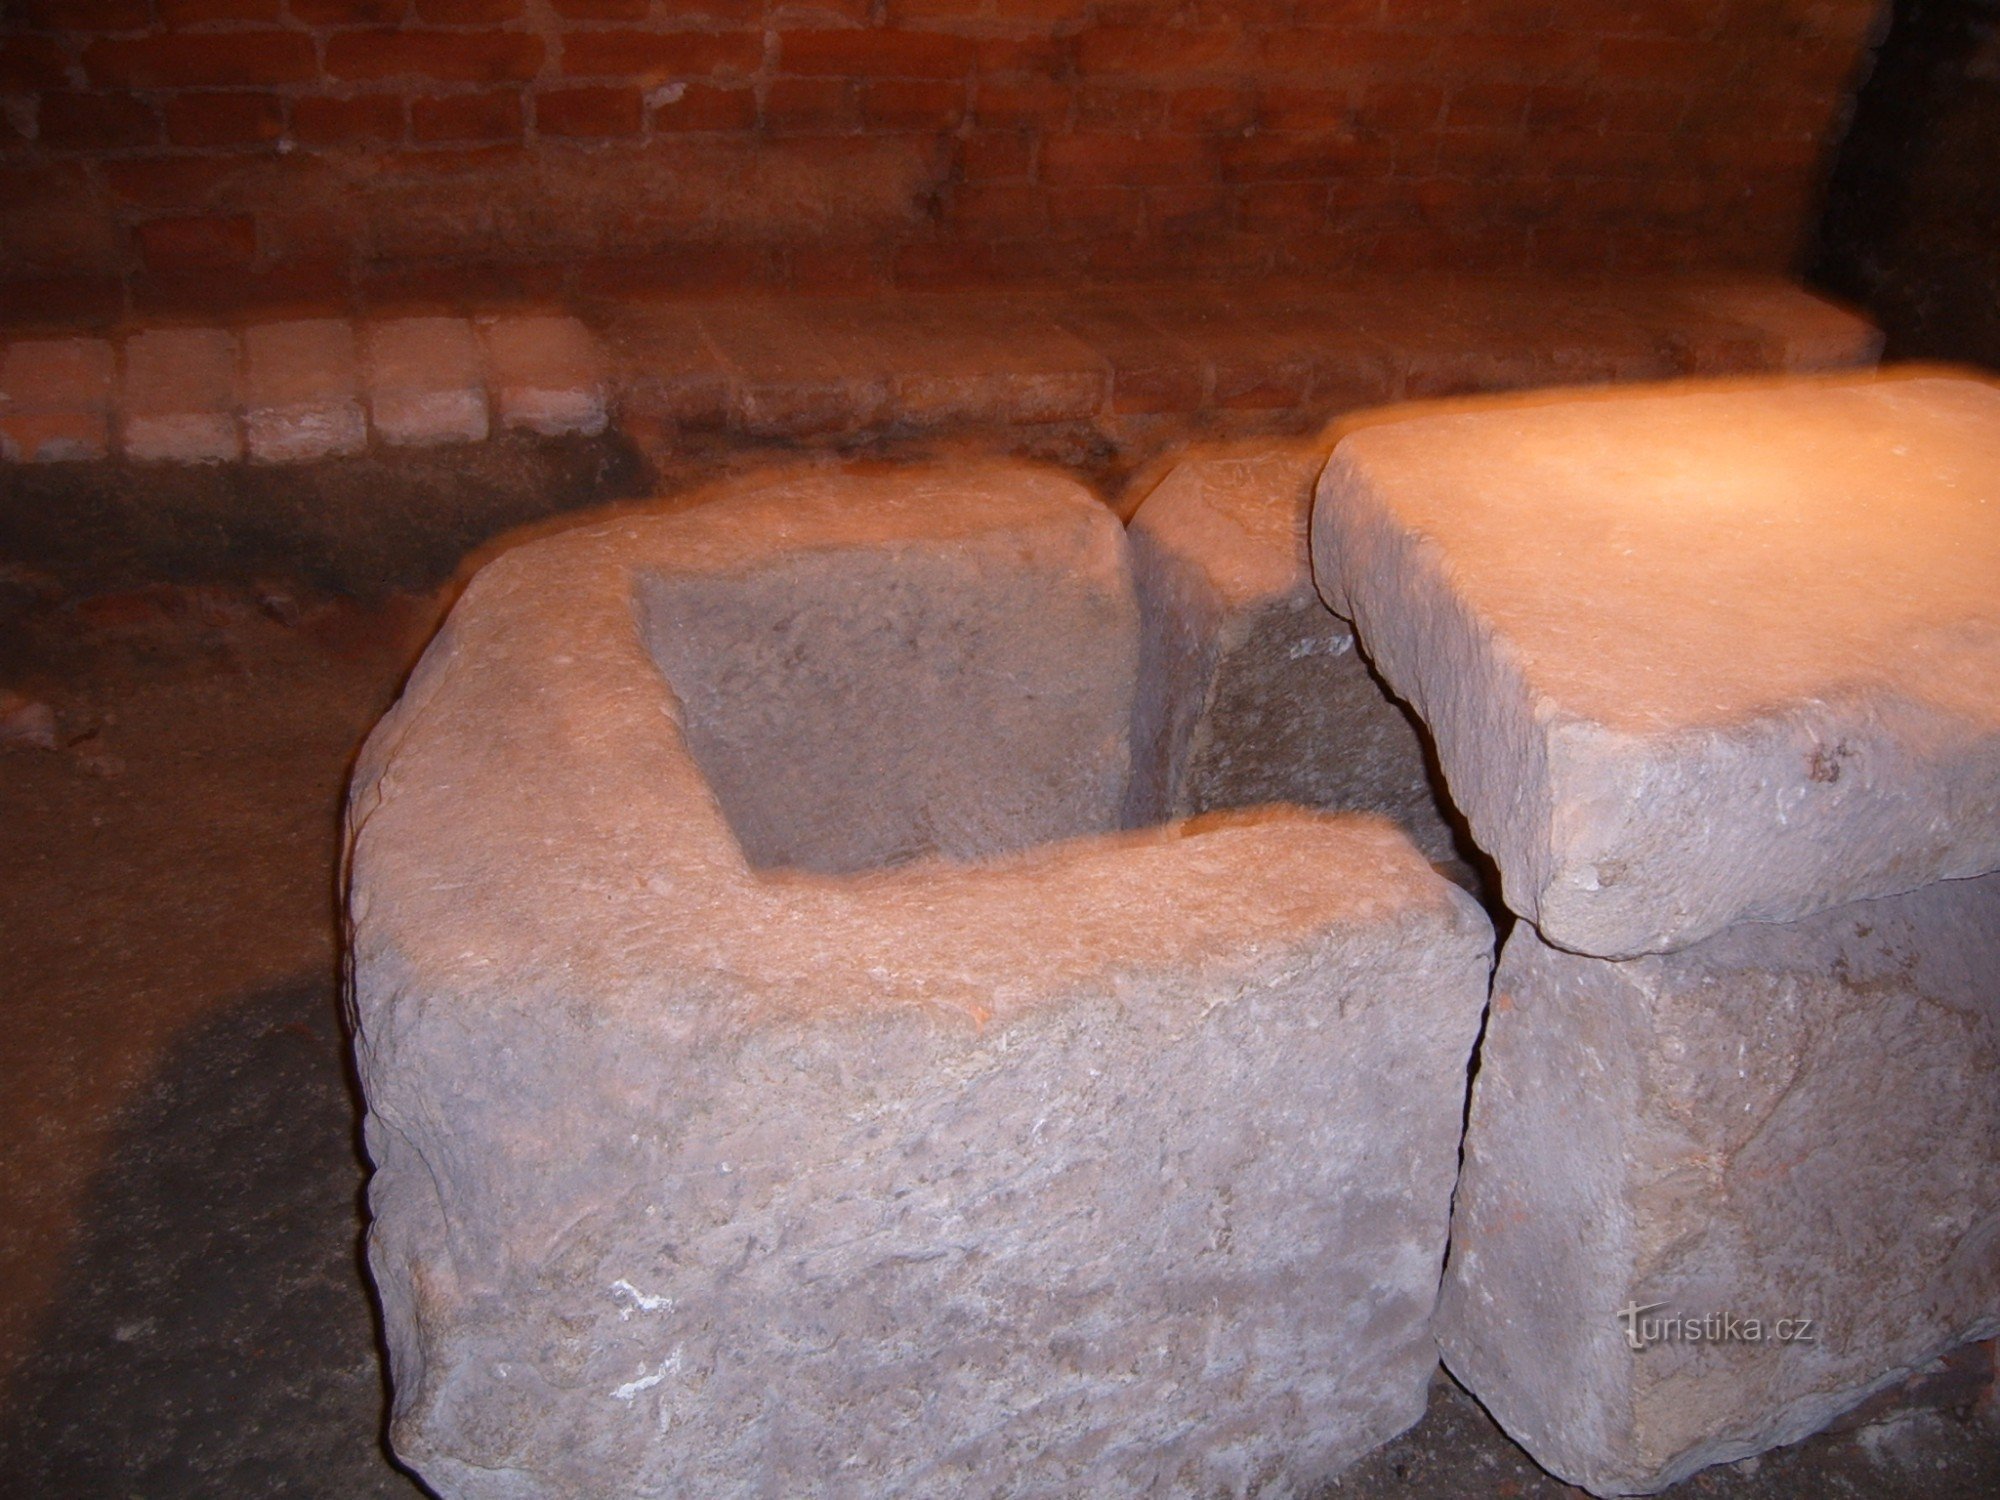 Velehrad - sargophagus in the catacombs